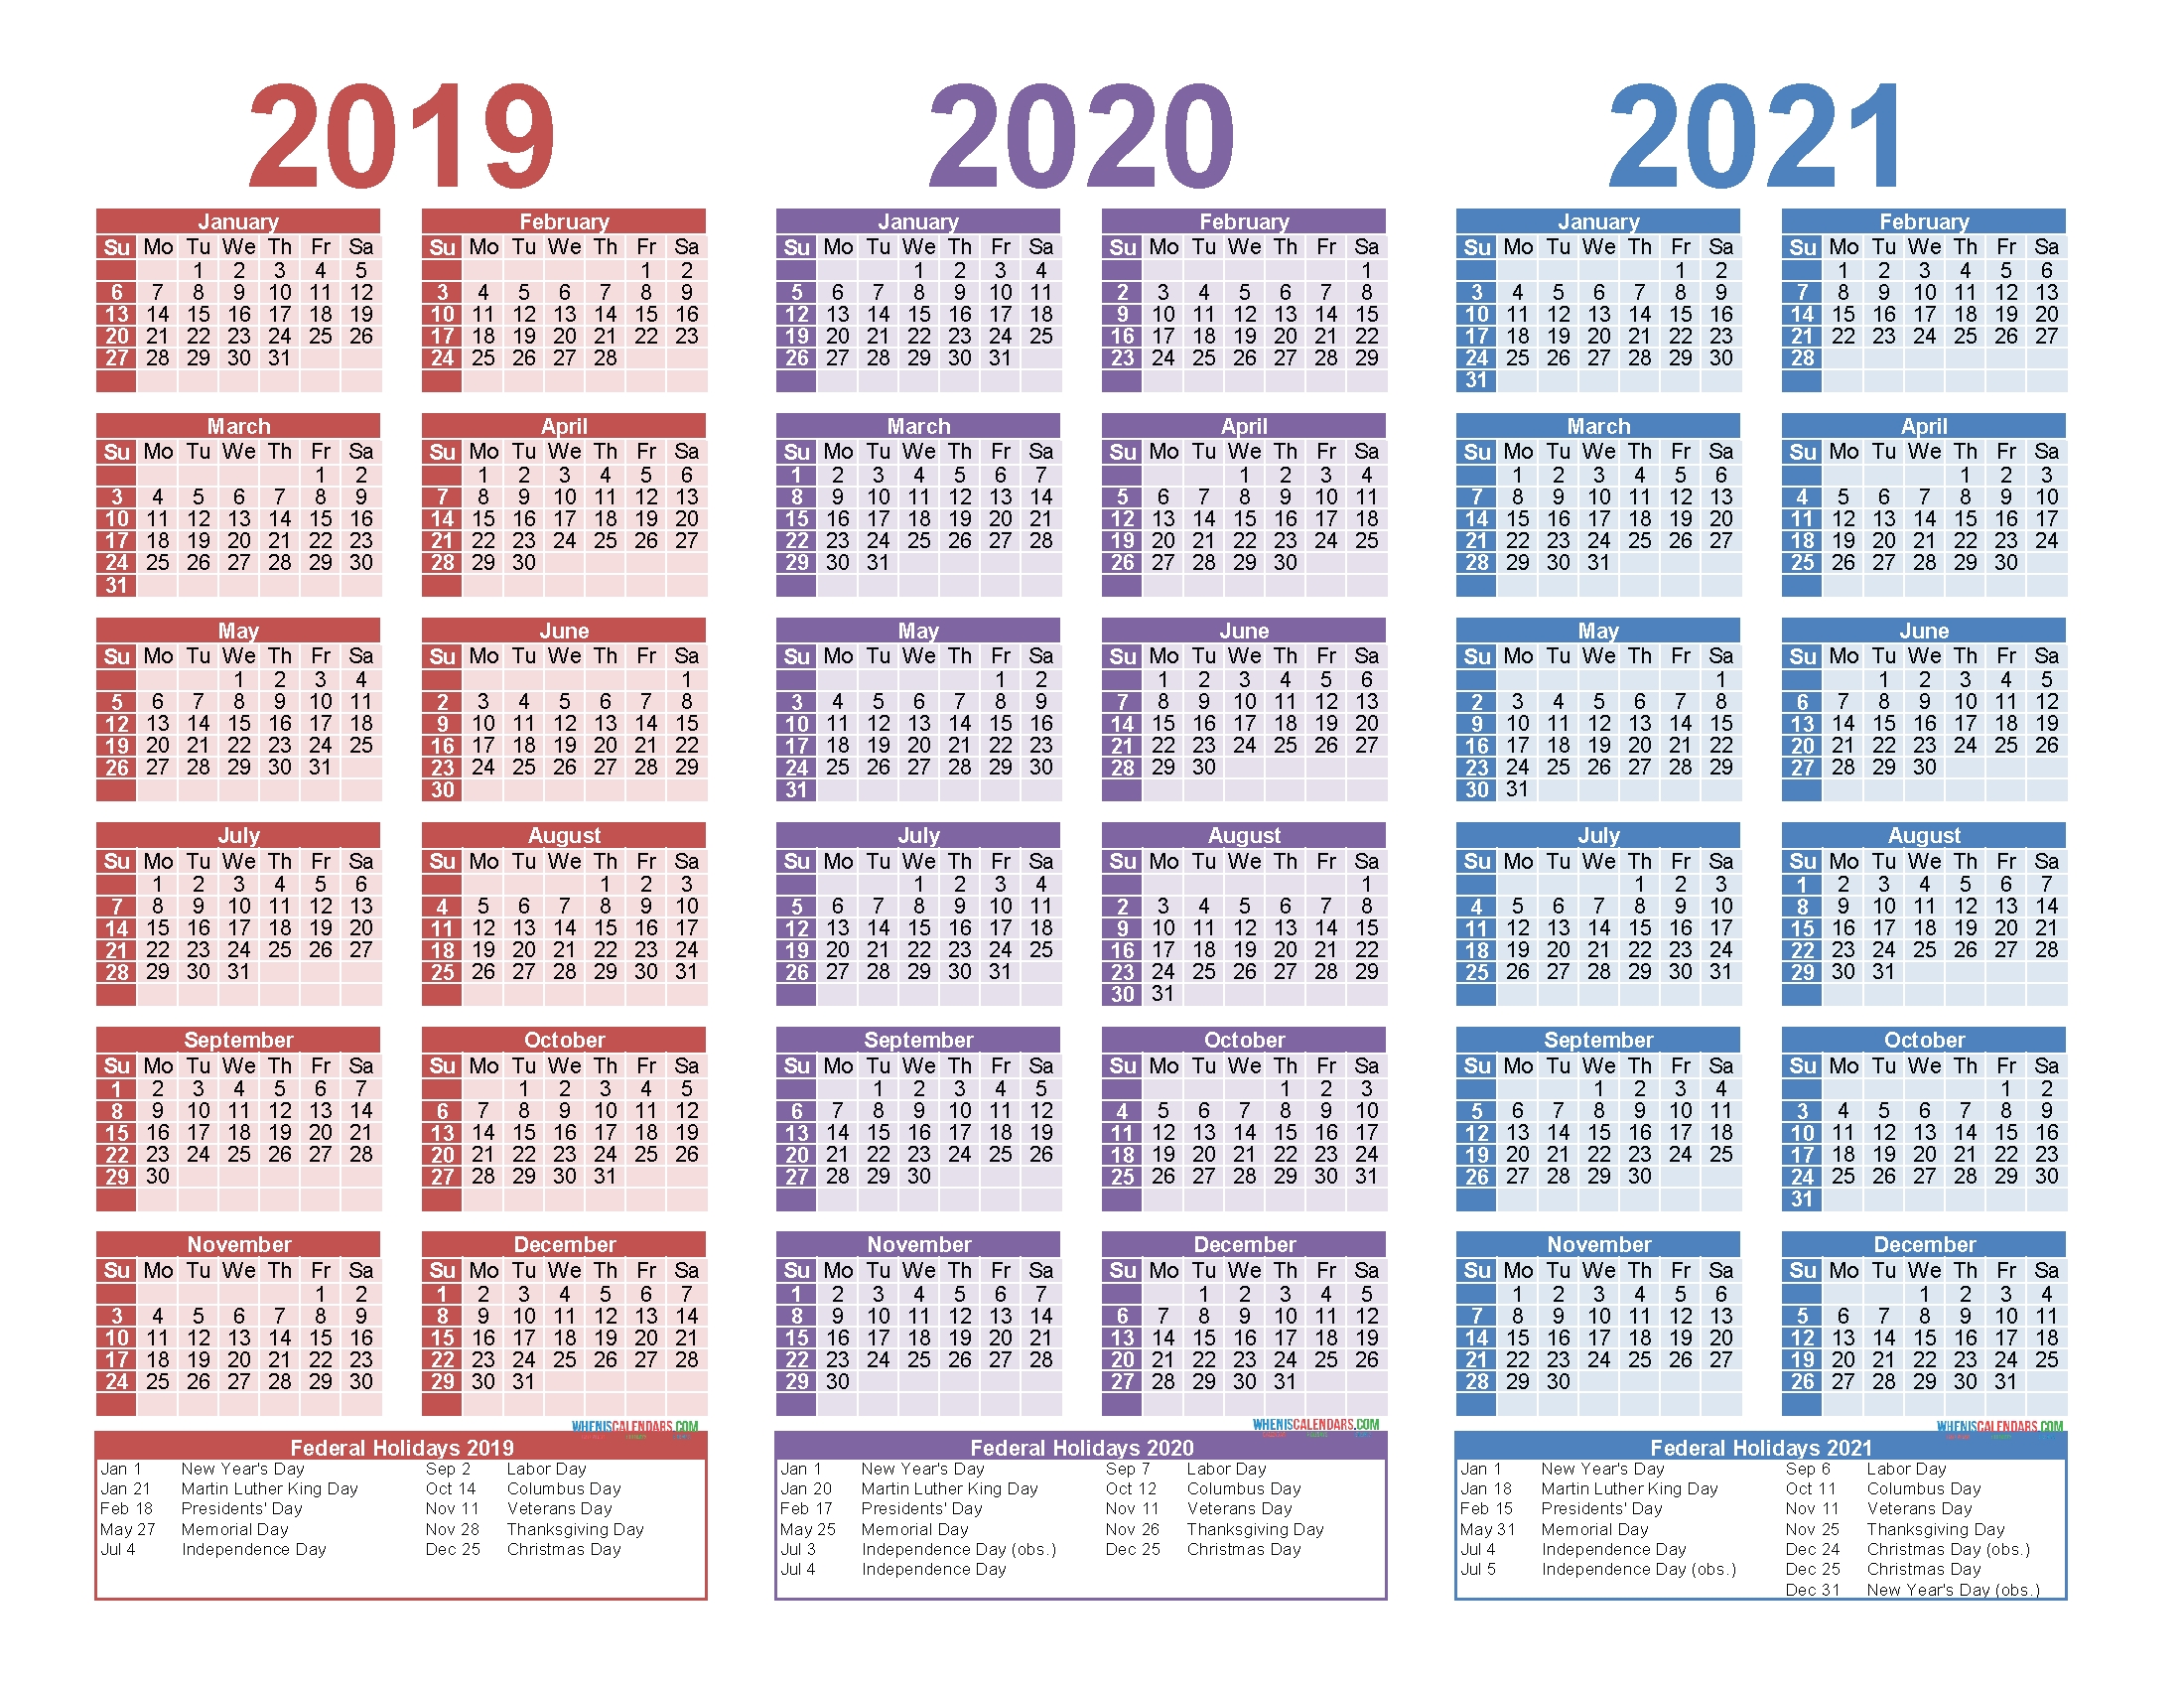 Free Printable 2019 2020 2021 Calendar With Holidays | Free inside 2019 To 2021 Printable Calendar